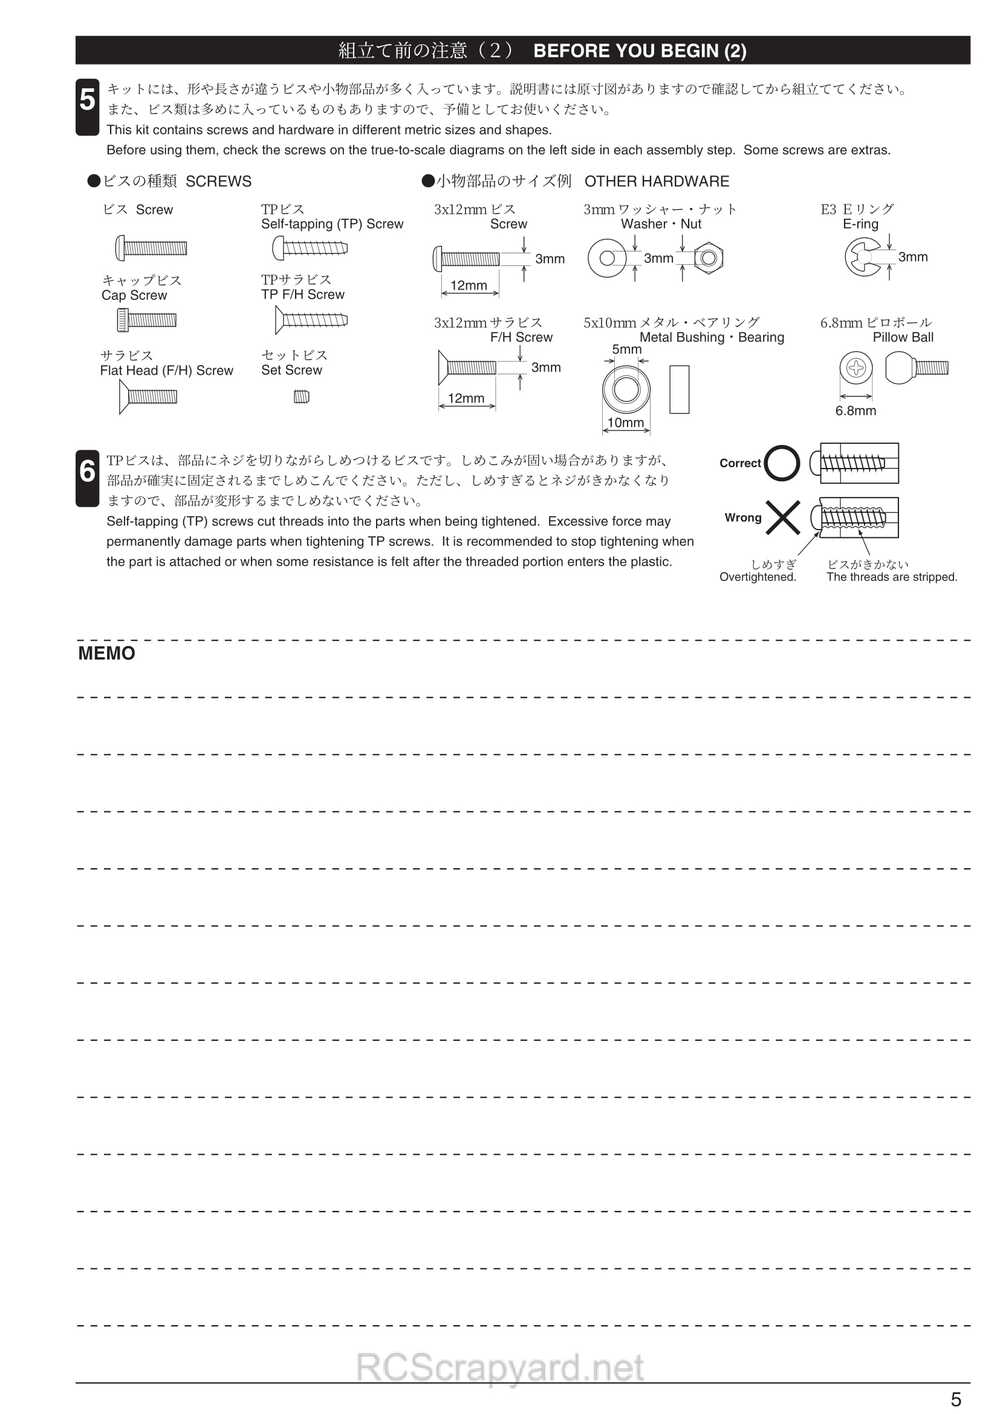 Kyosho - 31273 - Inferno-MP-7-5-Yuichi3 - Manual - Page 05